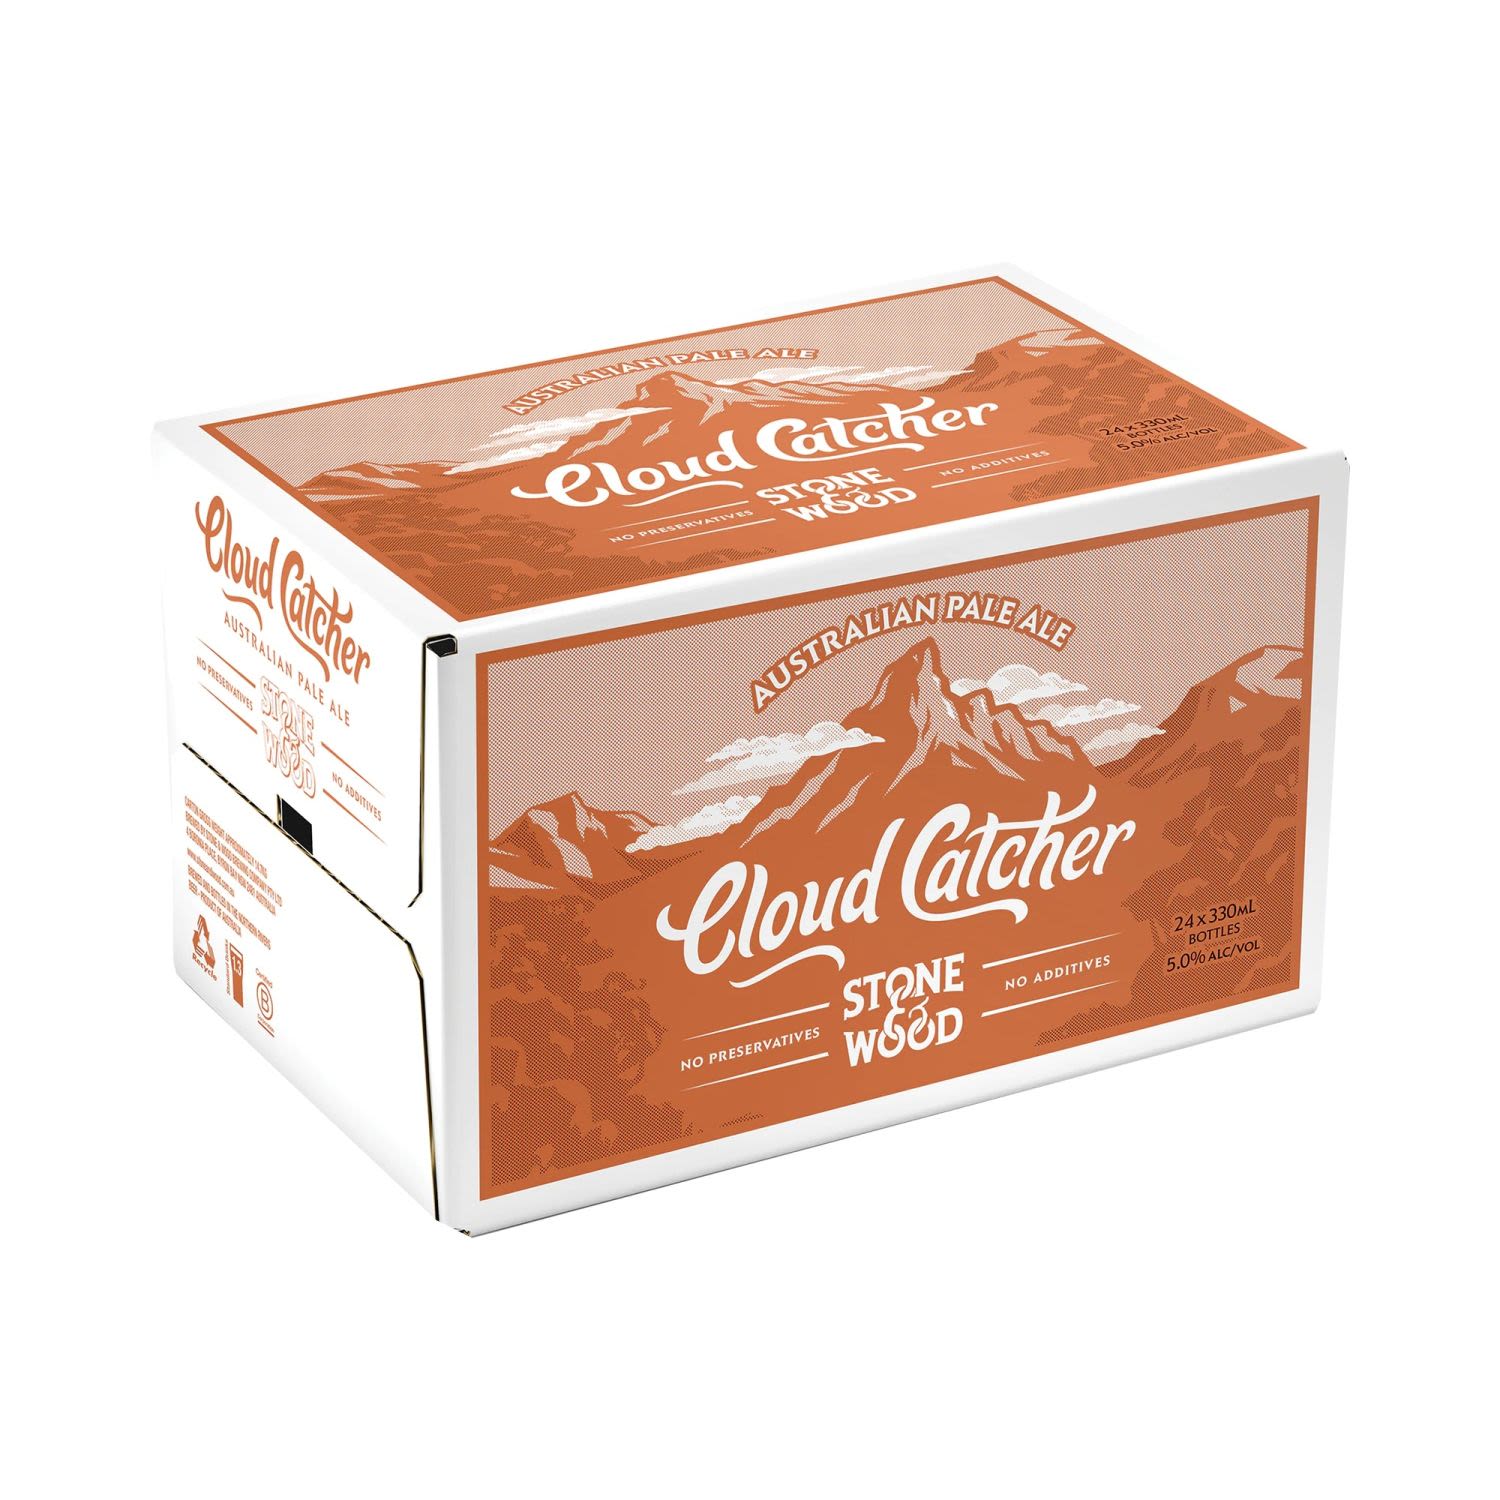 Stone & Wood Cloud Catcher Australian Pale Ale Bottle 330mL 24 Pack